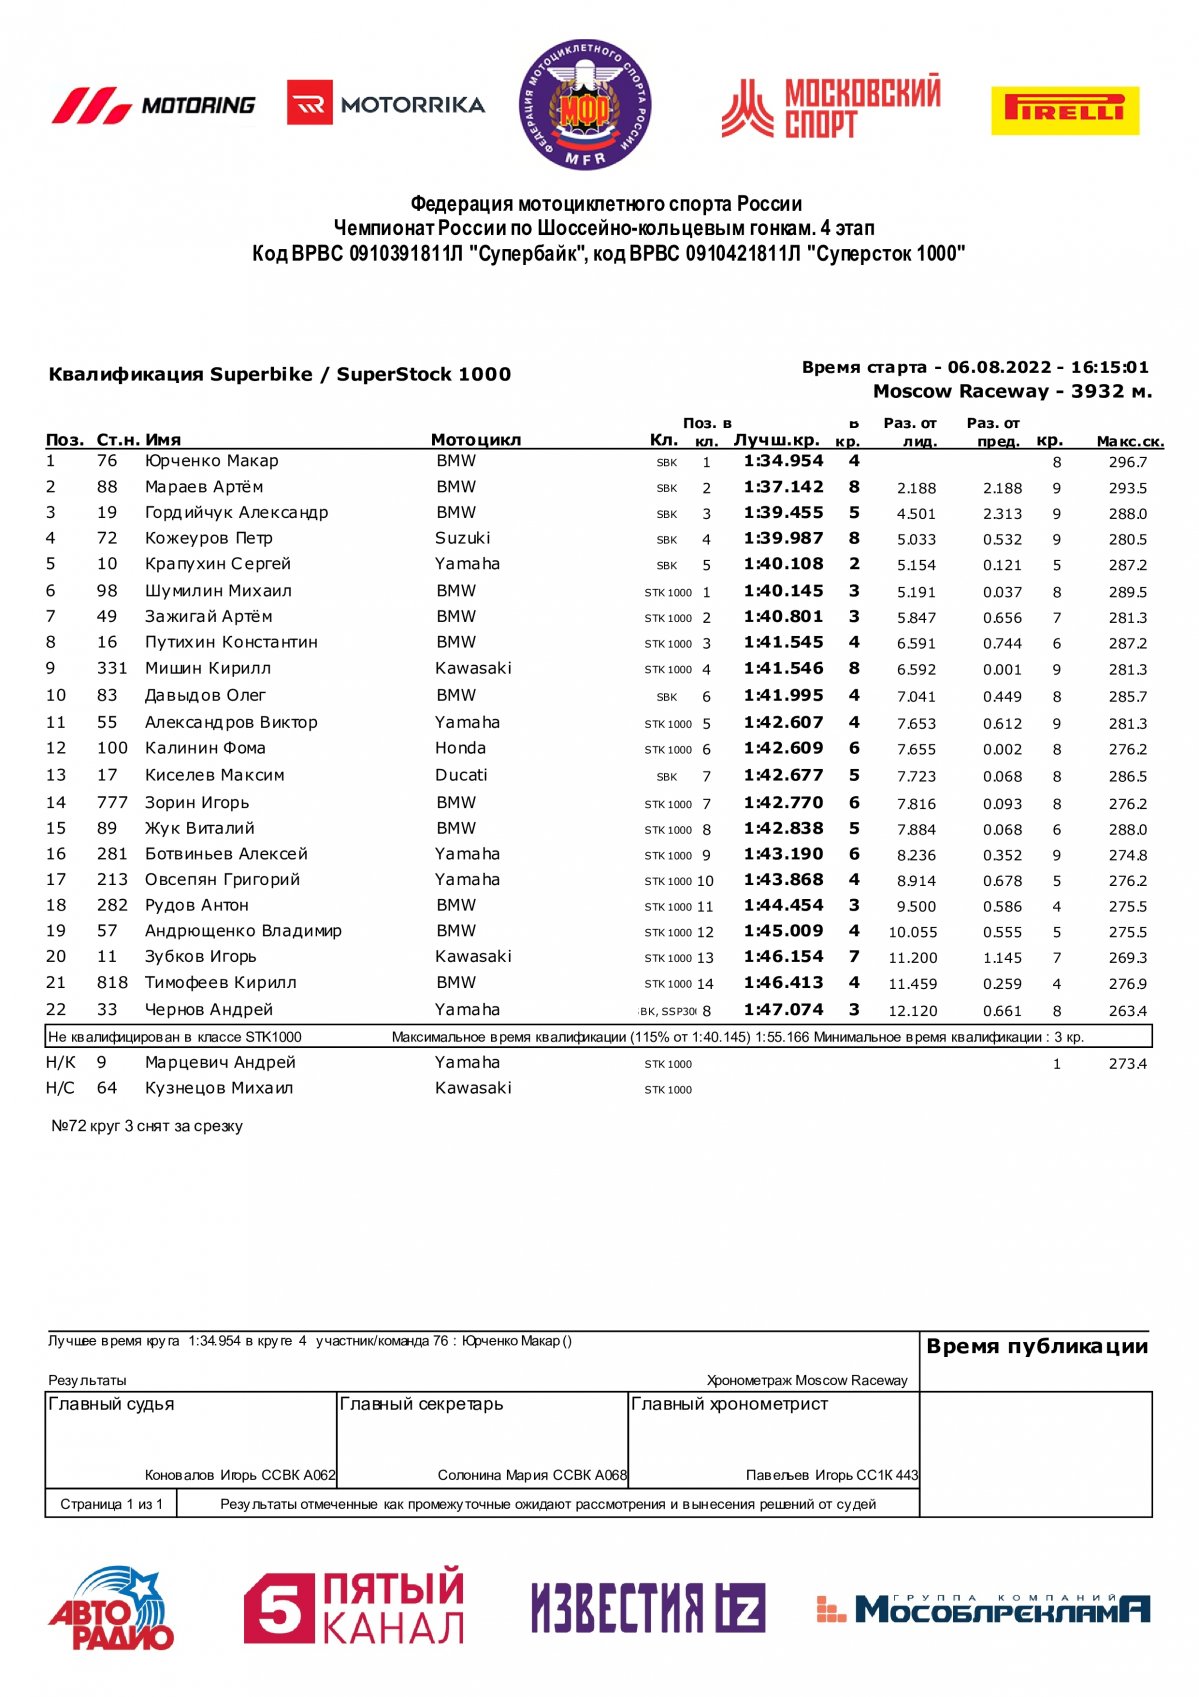 Результаты квалификации 4 этапа ШКМГ - Superbike/STK-1000, Moscow Raceway (6/08/2022)